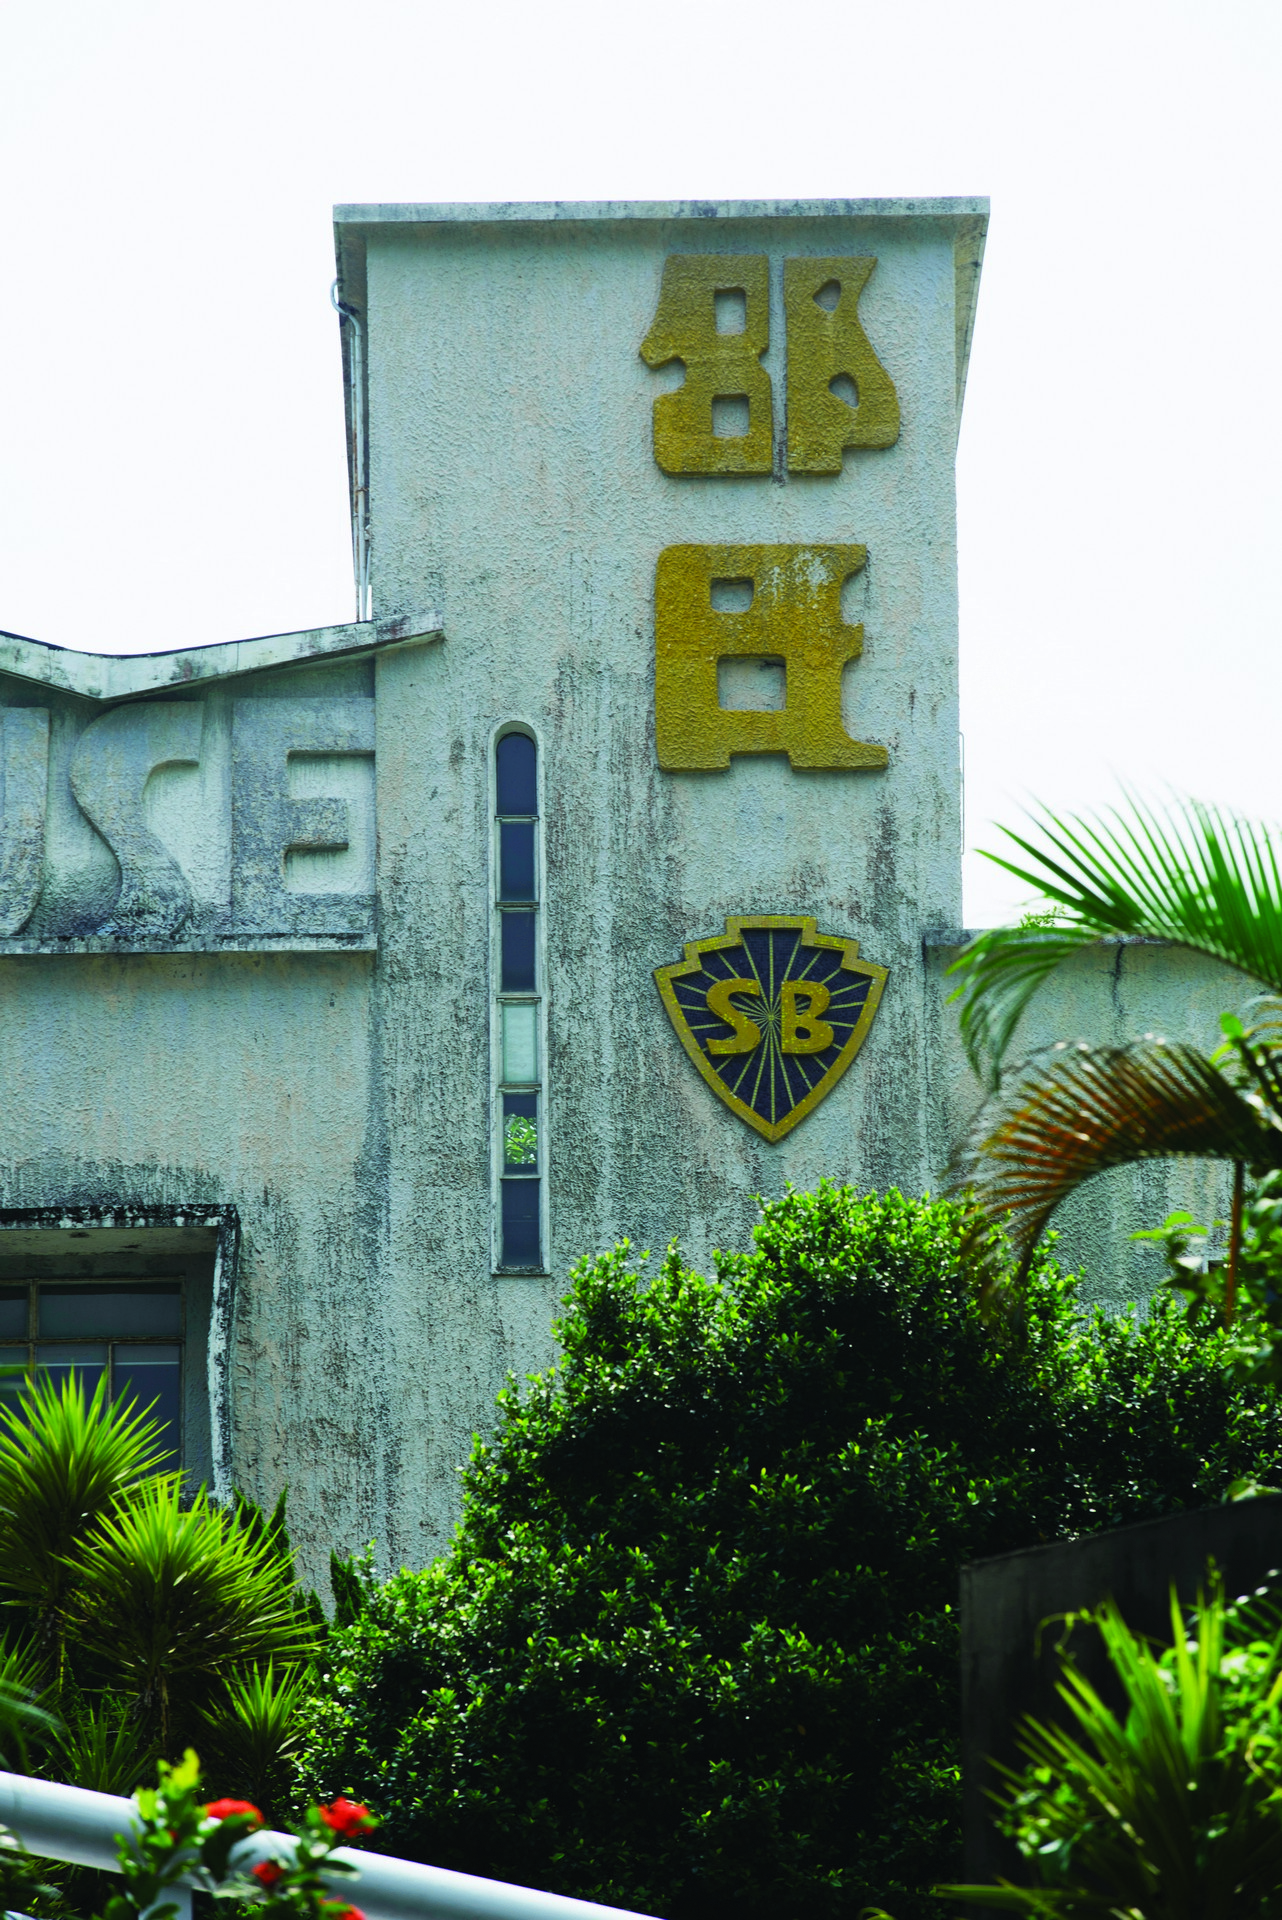 SB是Shaw Brothers縮寫，邵仁枚、邵逸夫兩兄弟早年經營戲院及發行，片場成立後製作超過一千部電影，創立大製片廠制度，統一以後期配音解決演員方言問題、引進先進弧形闊銀幕、推動伊士曼七彩電影，令香港電影進入黃金年代。